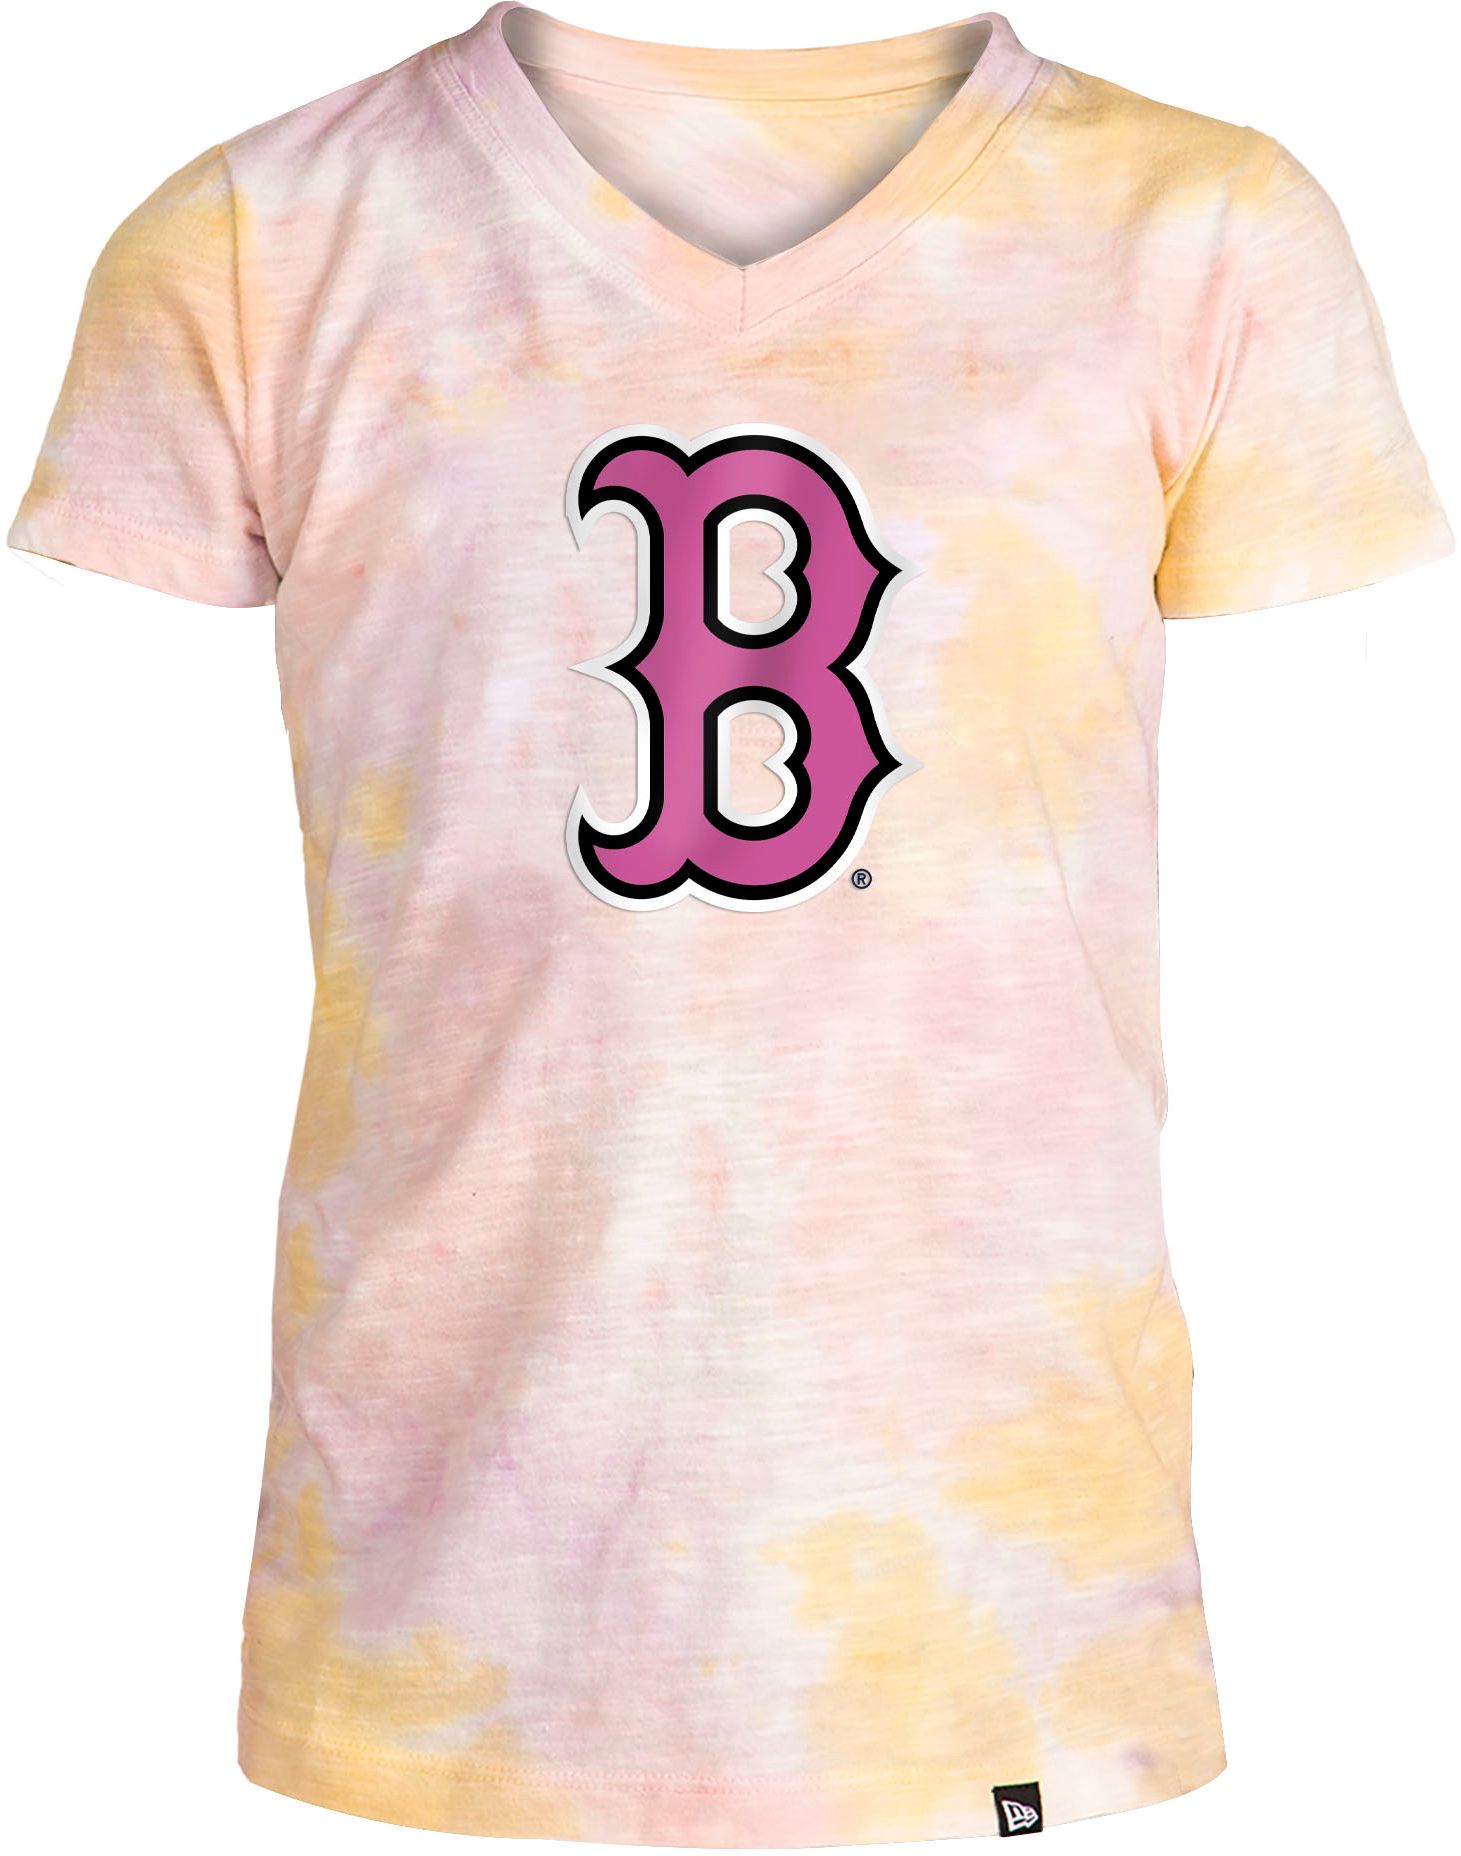 New Era / Apparel Girl's Boston Red Sox Tie Dye V-Neck T-Shirt